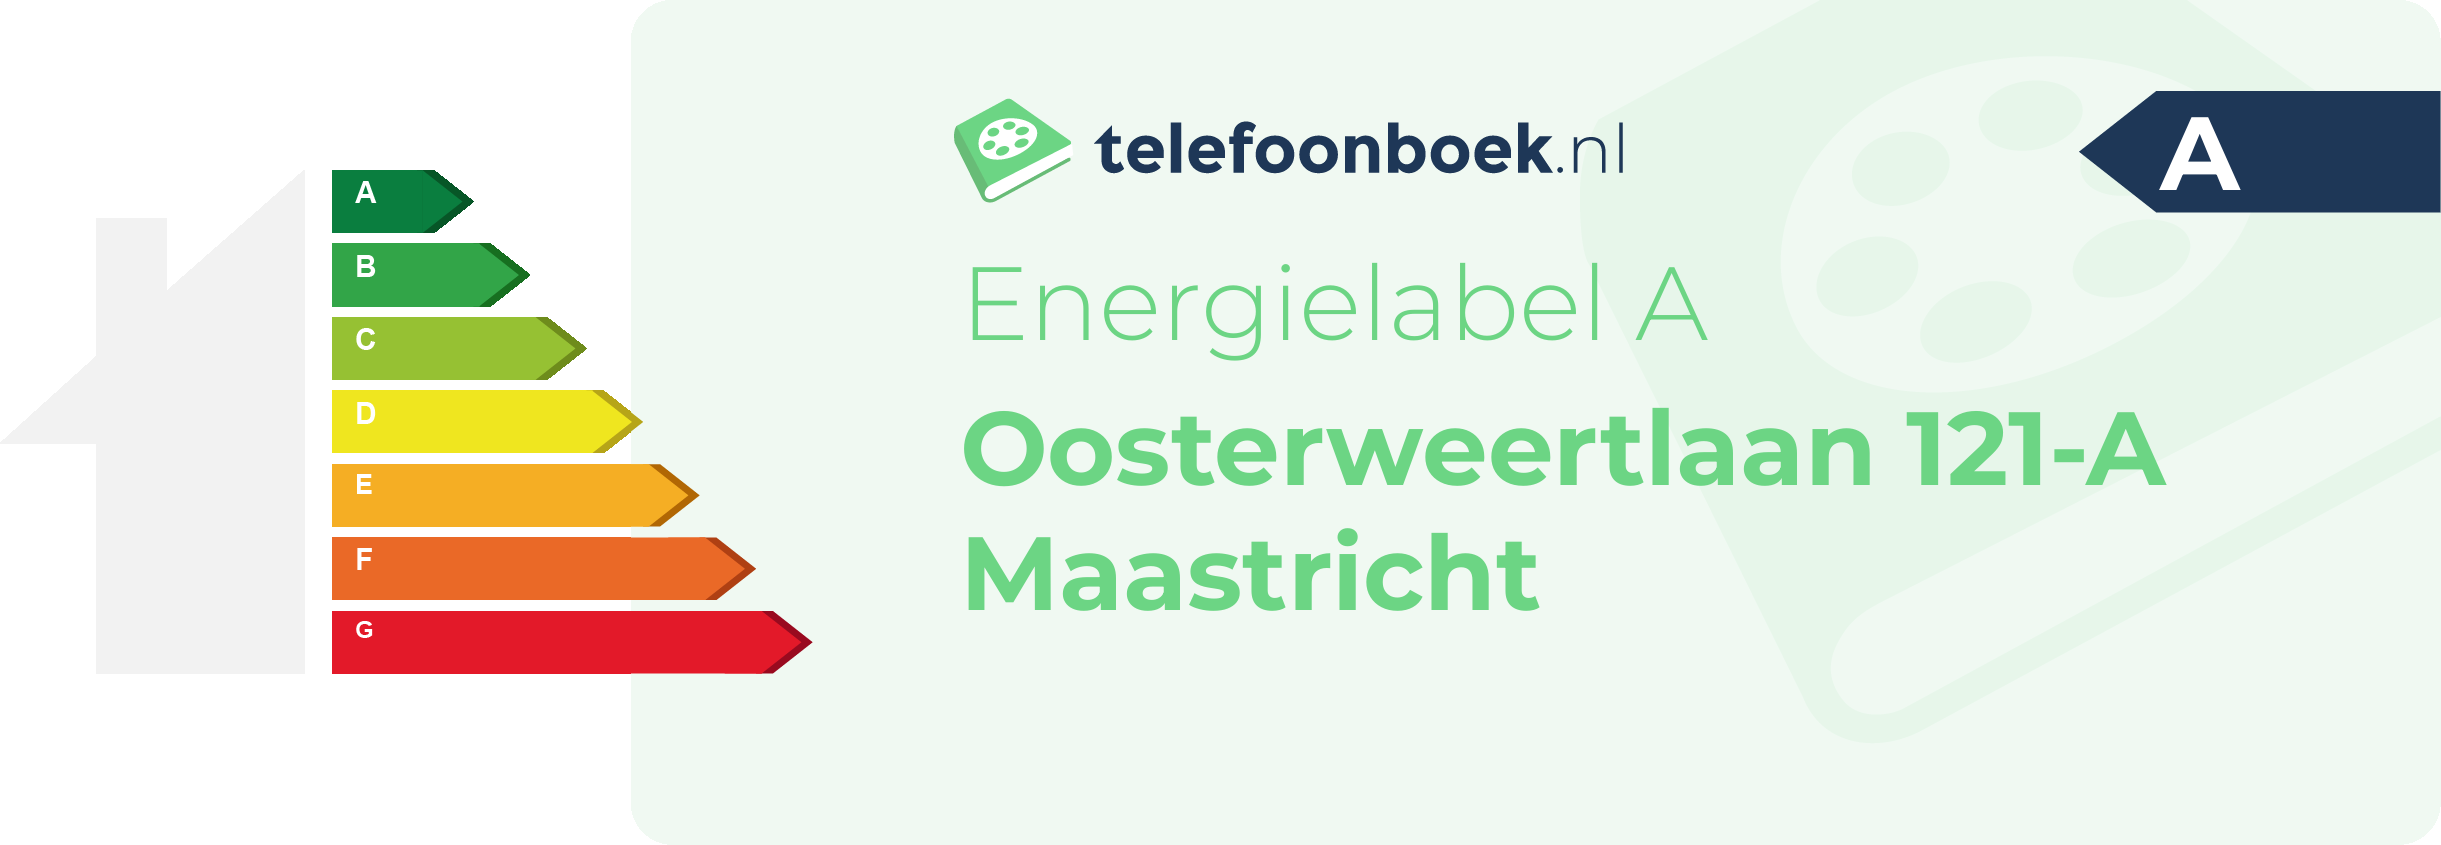 Energielabel Oosterweertlaan 121-A Maastricht